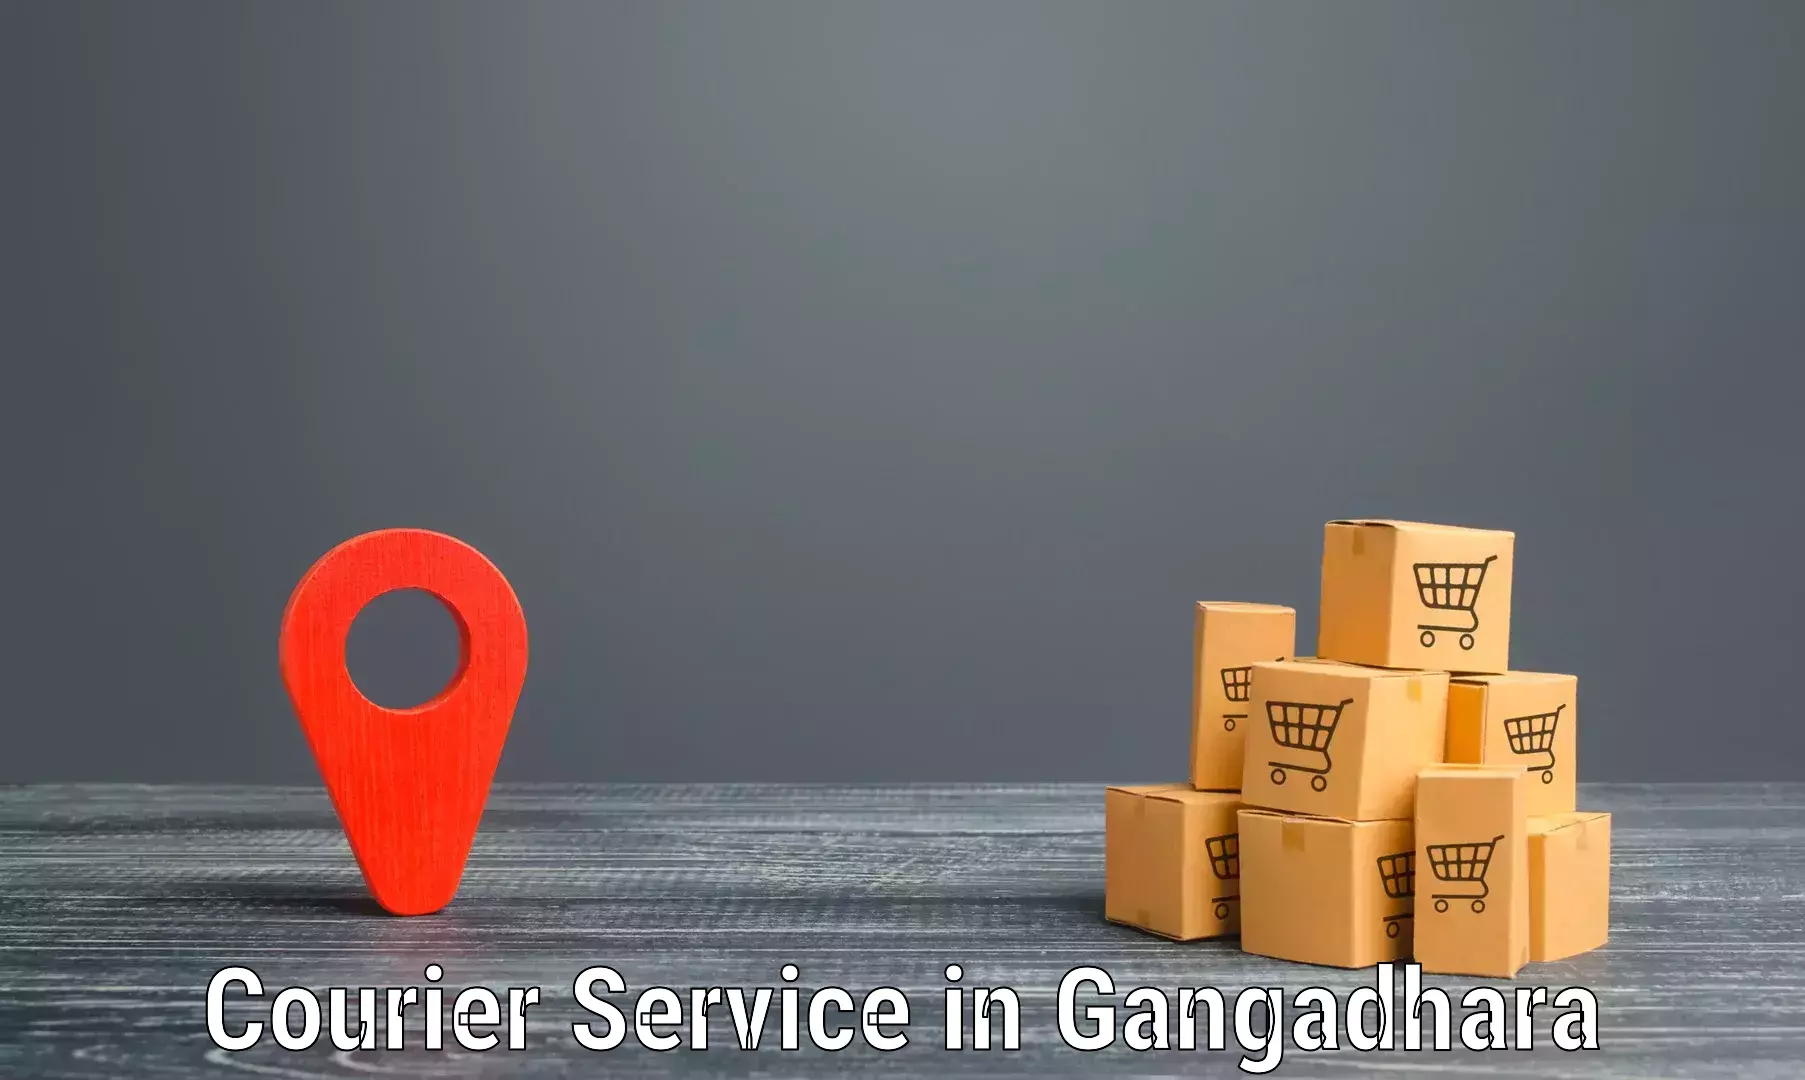 Flexible shipping options in Gangadhara